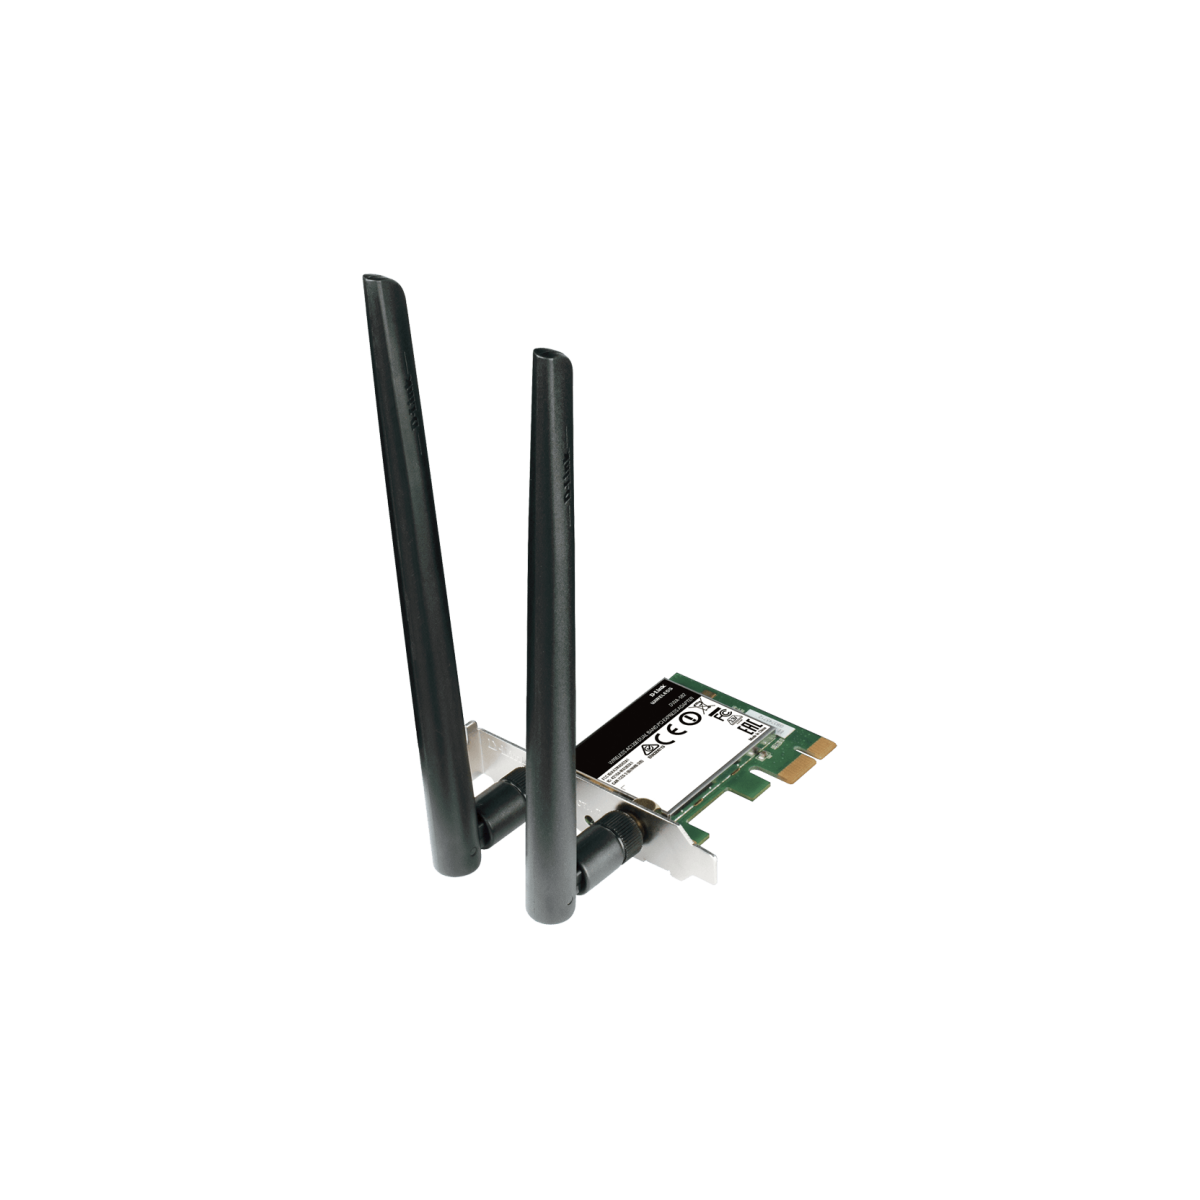 D-Link DWA-582 Wireless AC1200 Dual-Band PCI Express Adapter